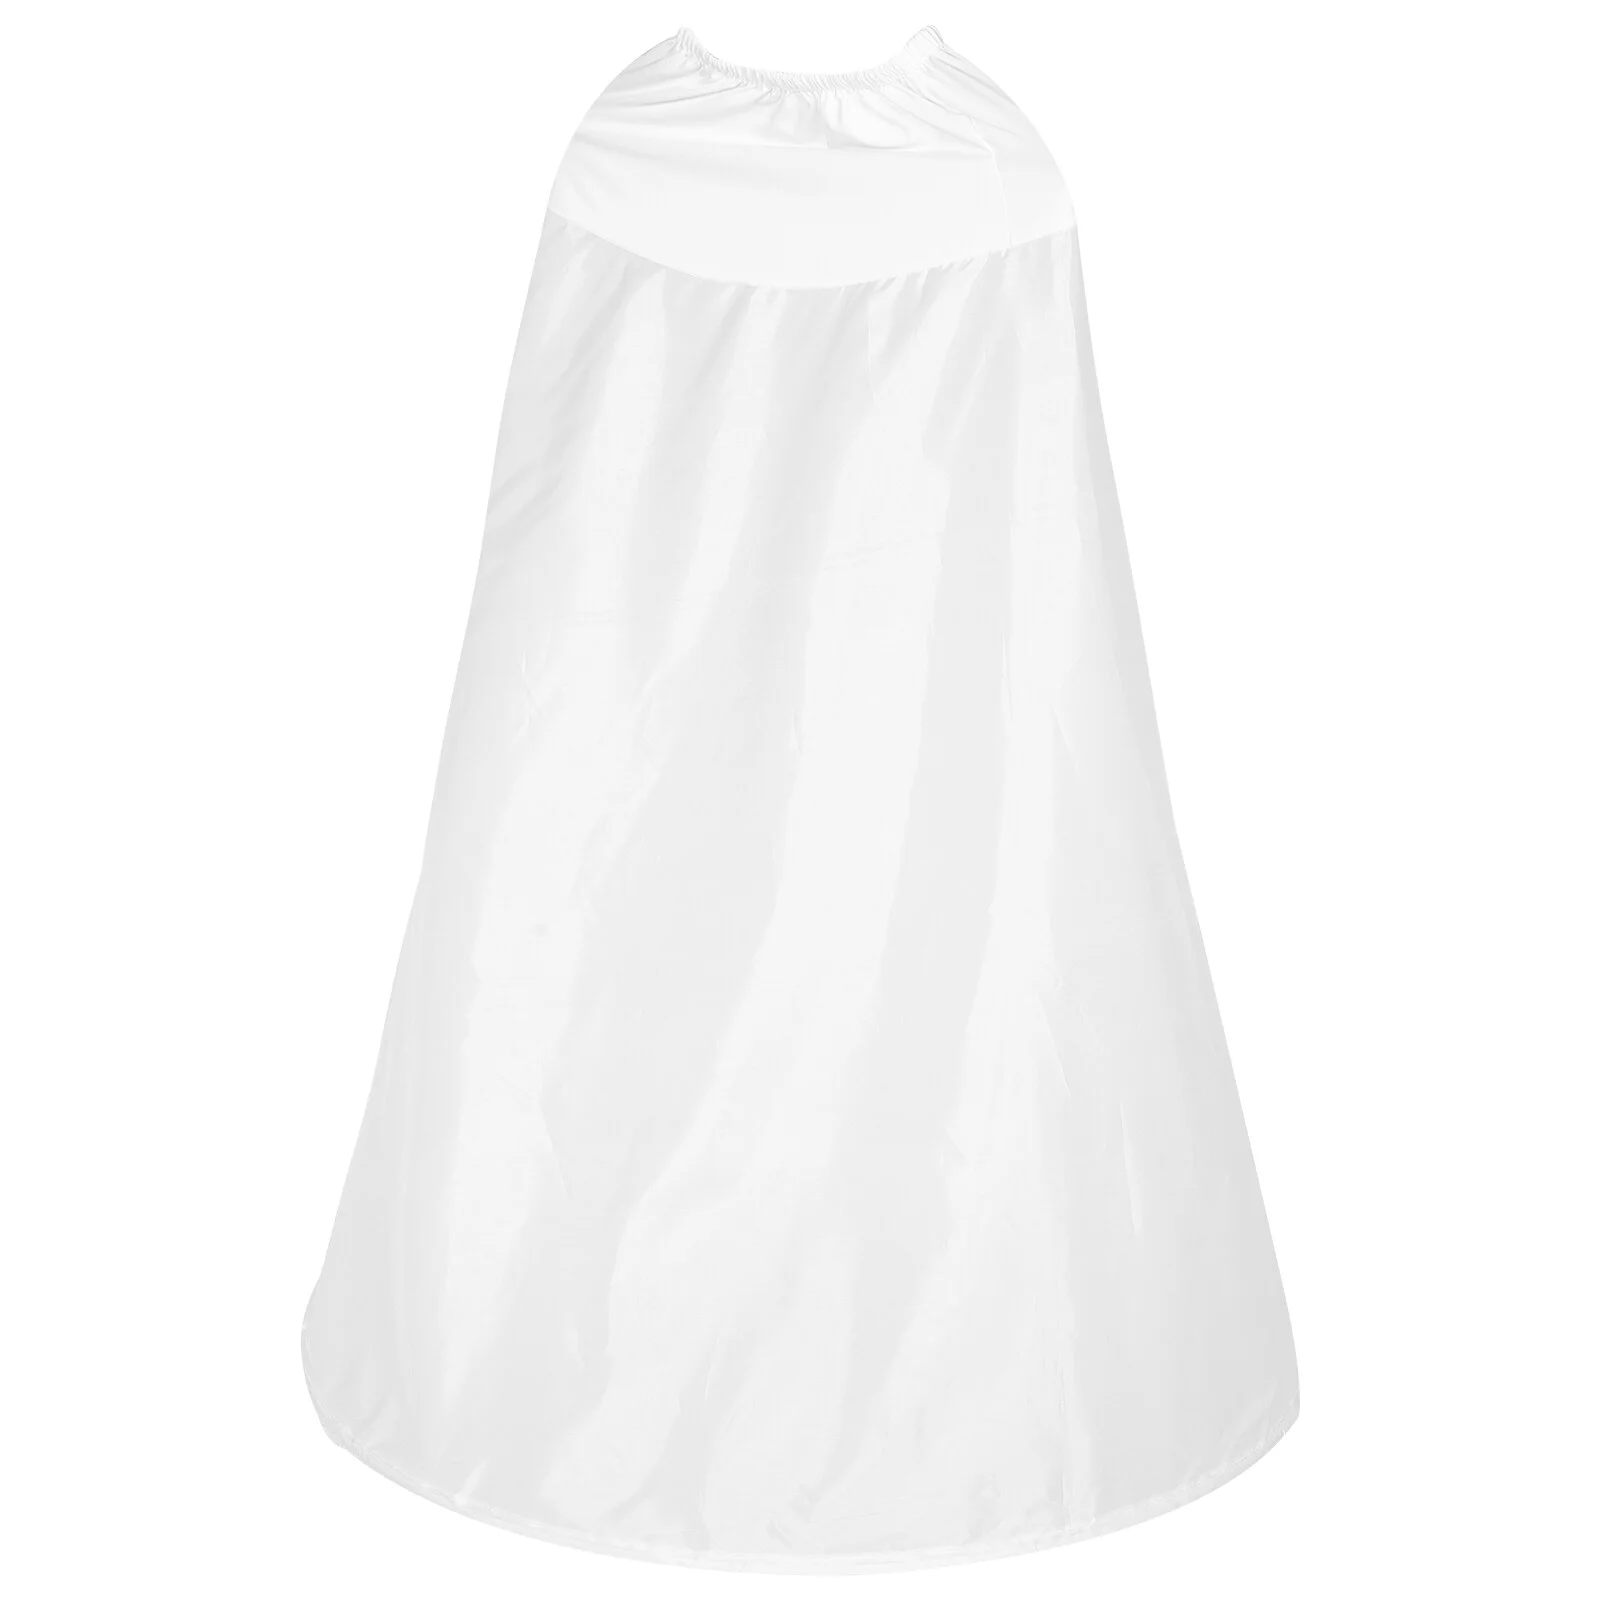 Sundress Women's Formal Dresses Women Wedding Crinoline Petticoat Skirt Elastic Fabric Petticoats Accessories Women's Bridal